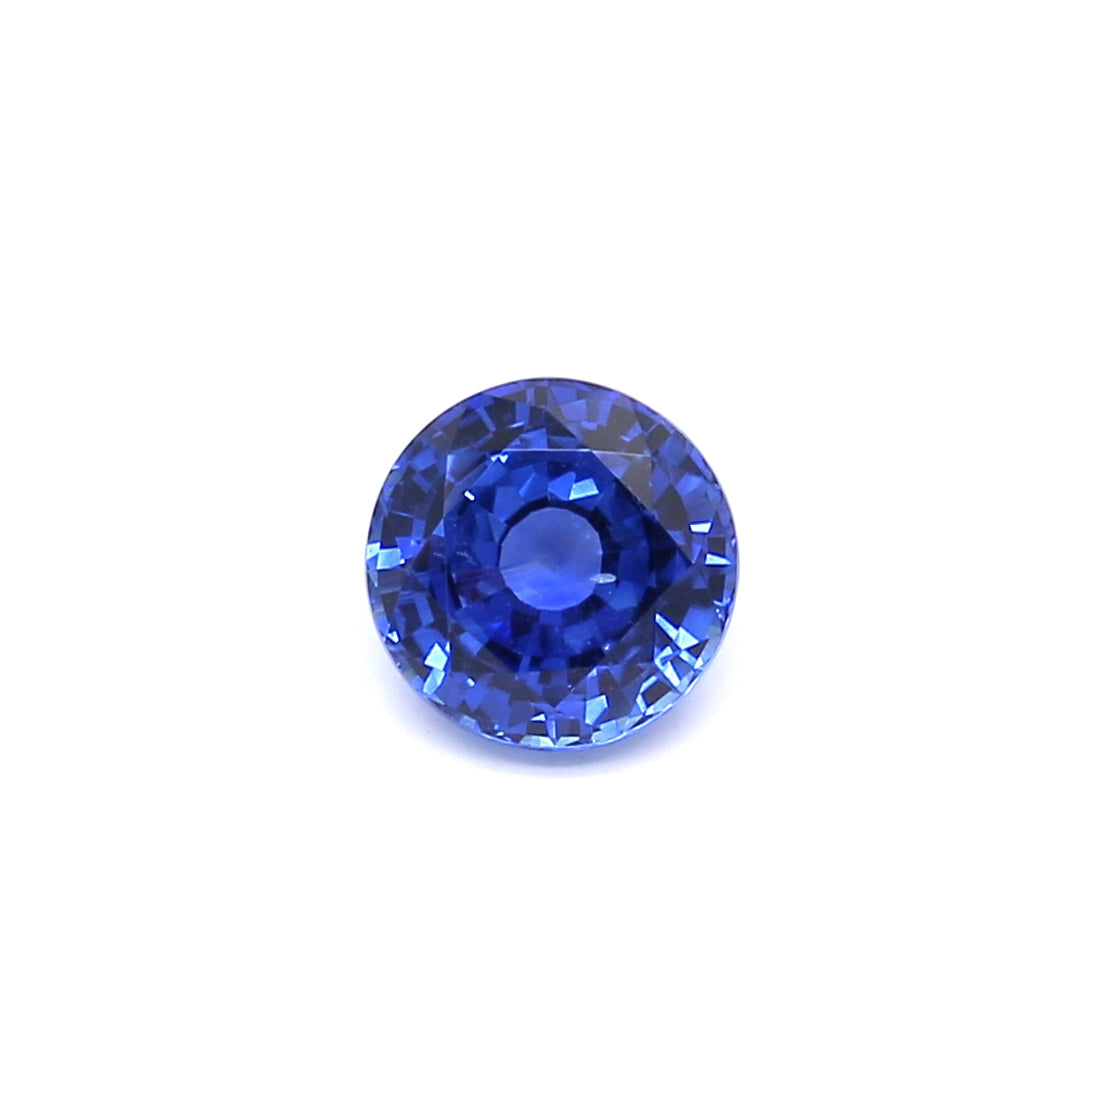 1.48ct Round Sapphire, Heated, Sri Lanka - 6.57 x 6.62 x 4.07mm